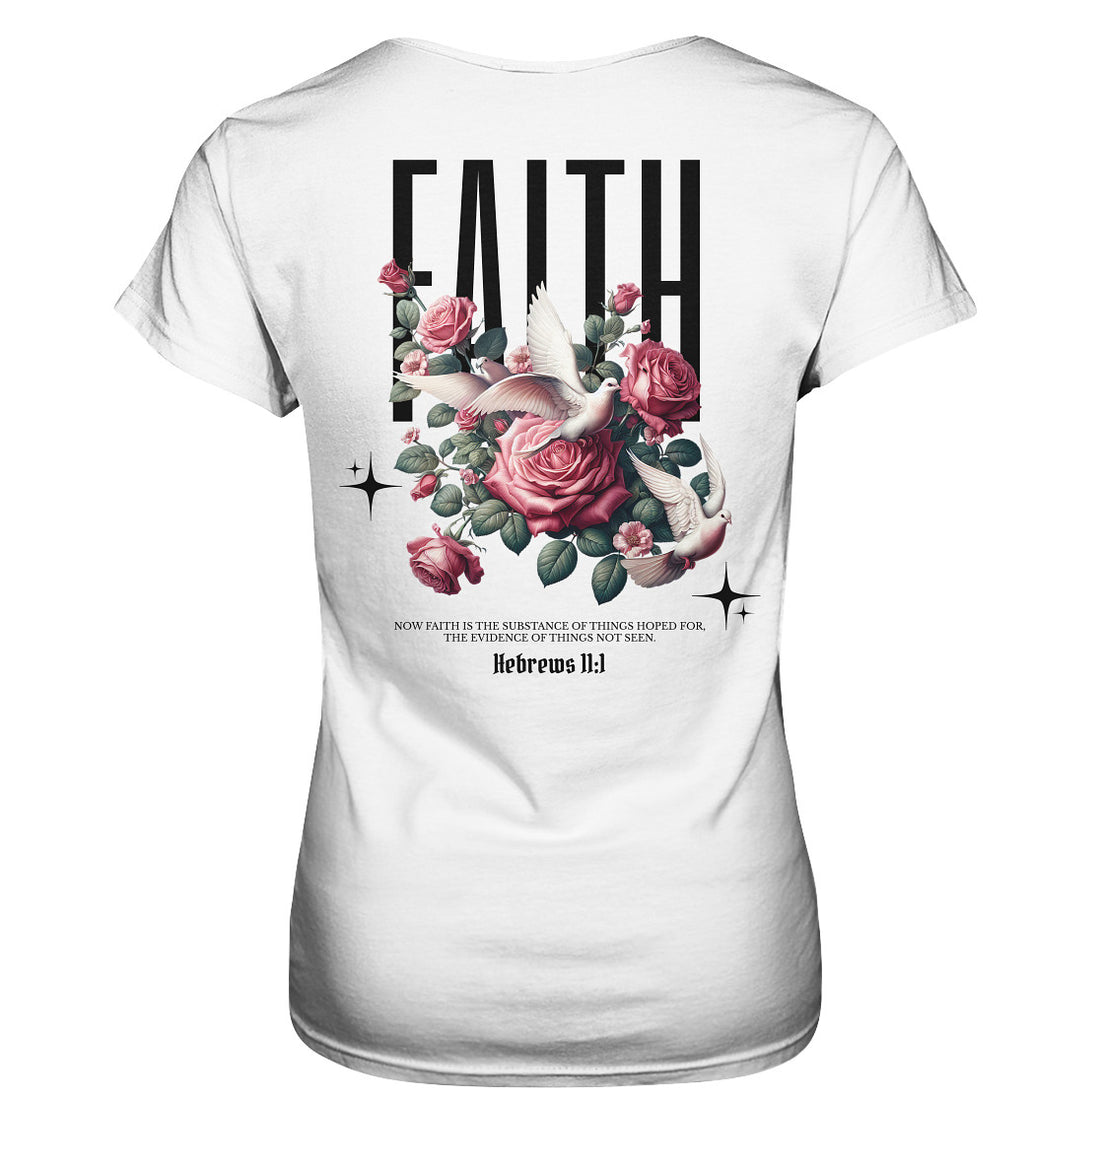 Hebr 11,1 - FAITH - Rückenprint - Ladies Premium Shirt